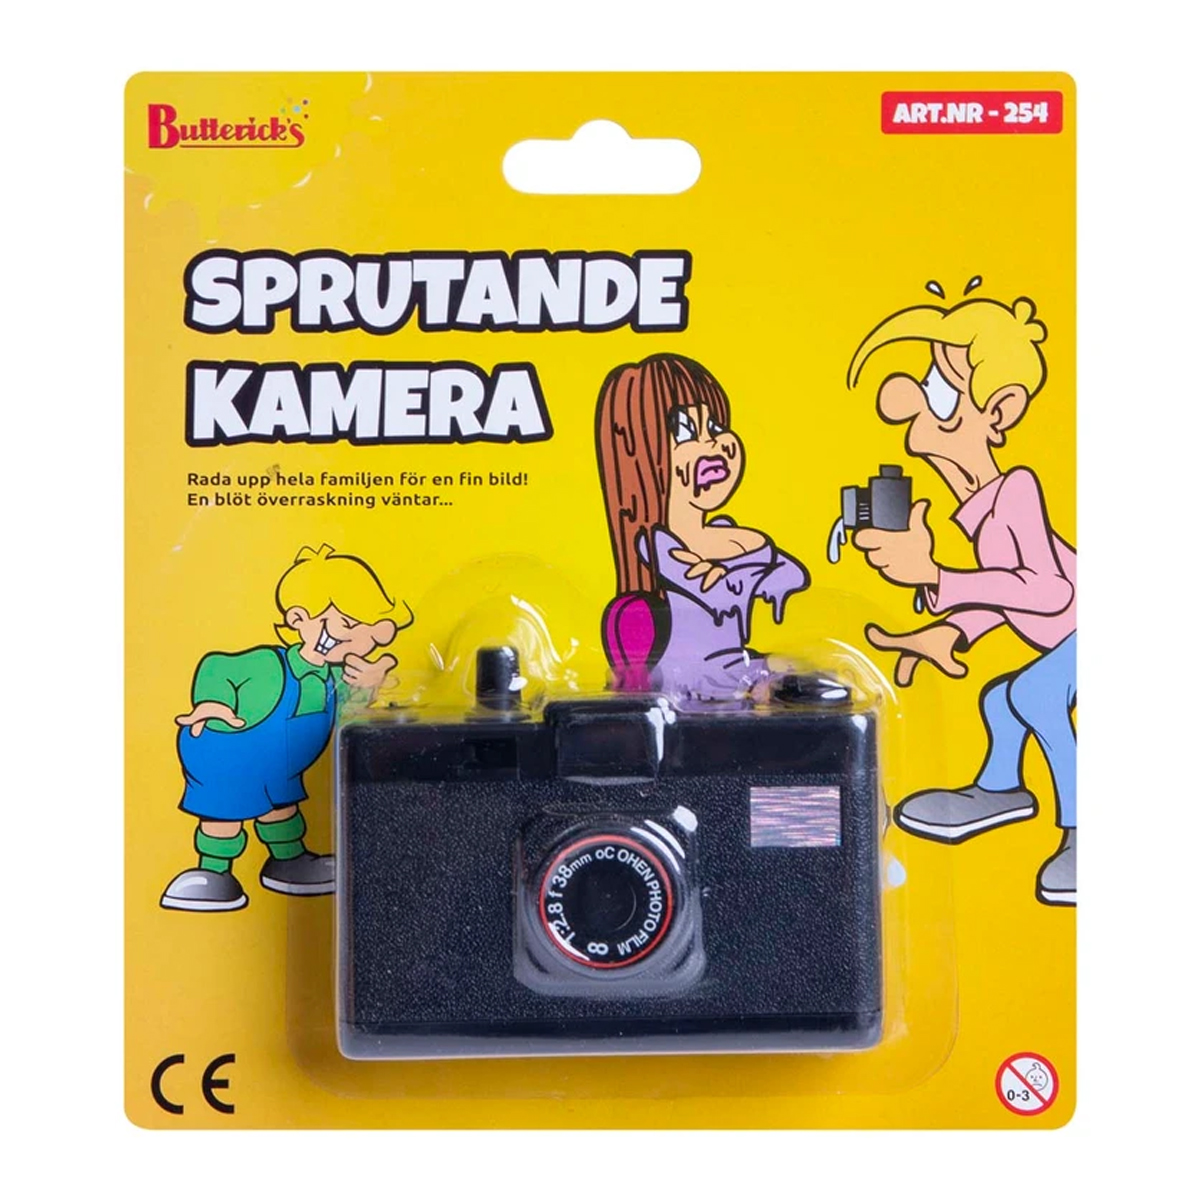 Sprutande kamera